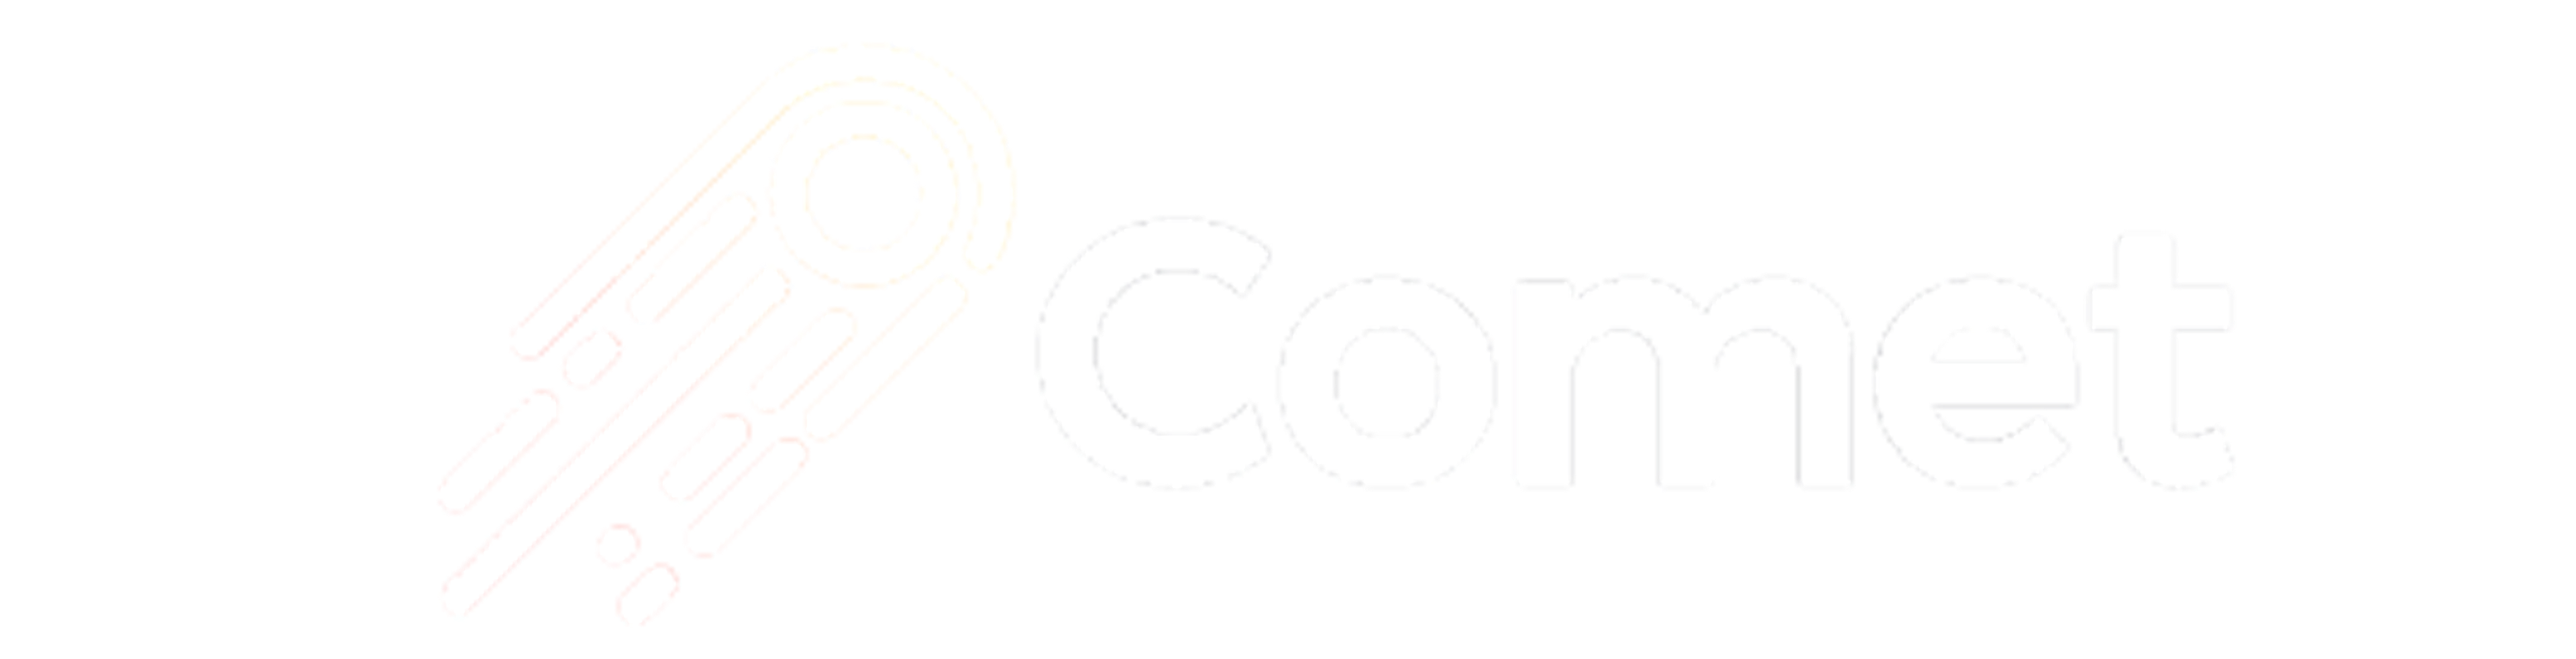 Comet logo white